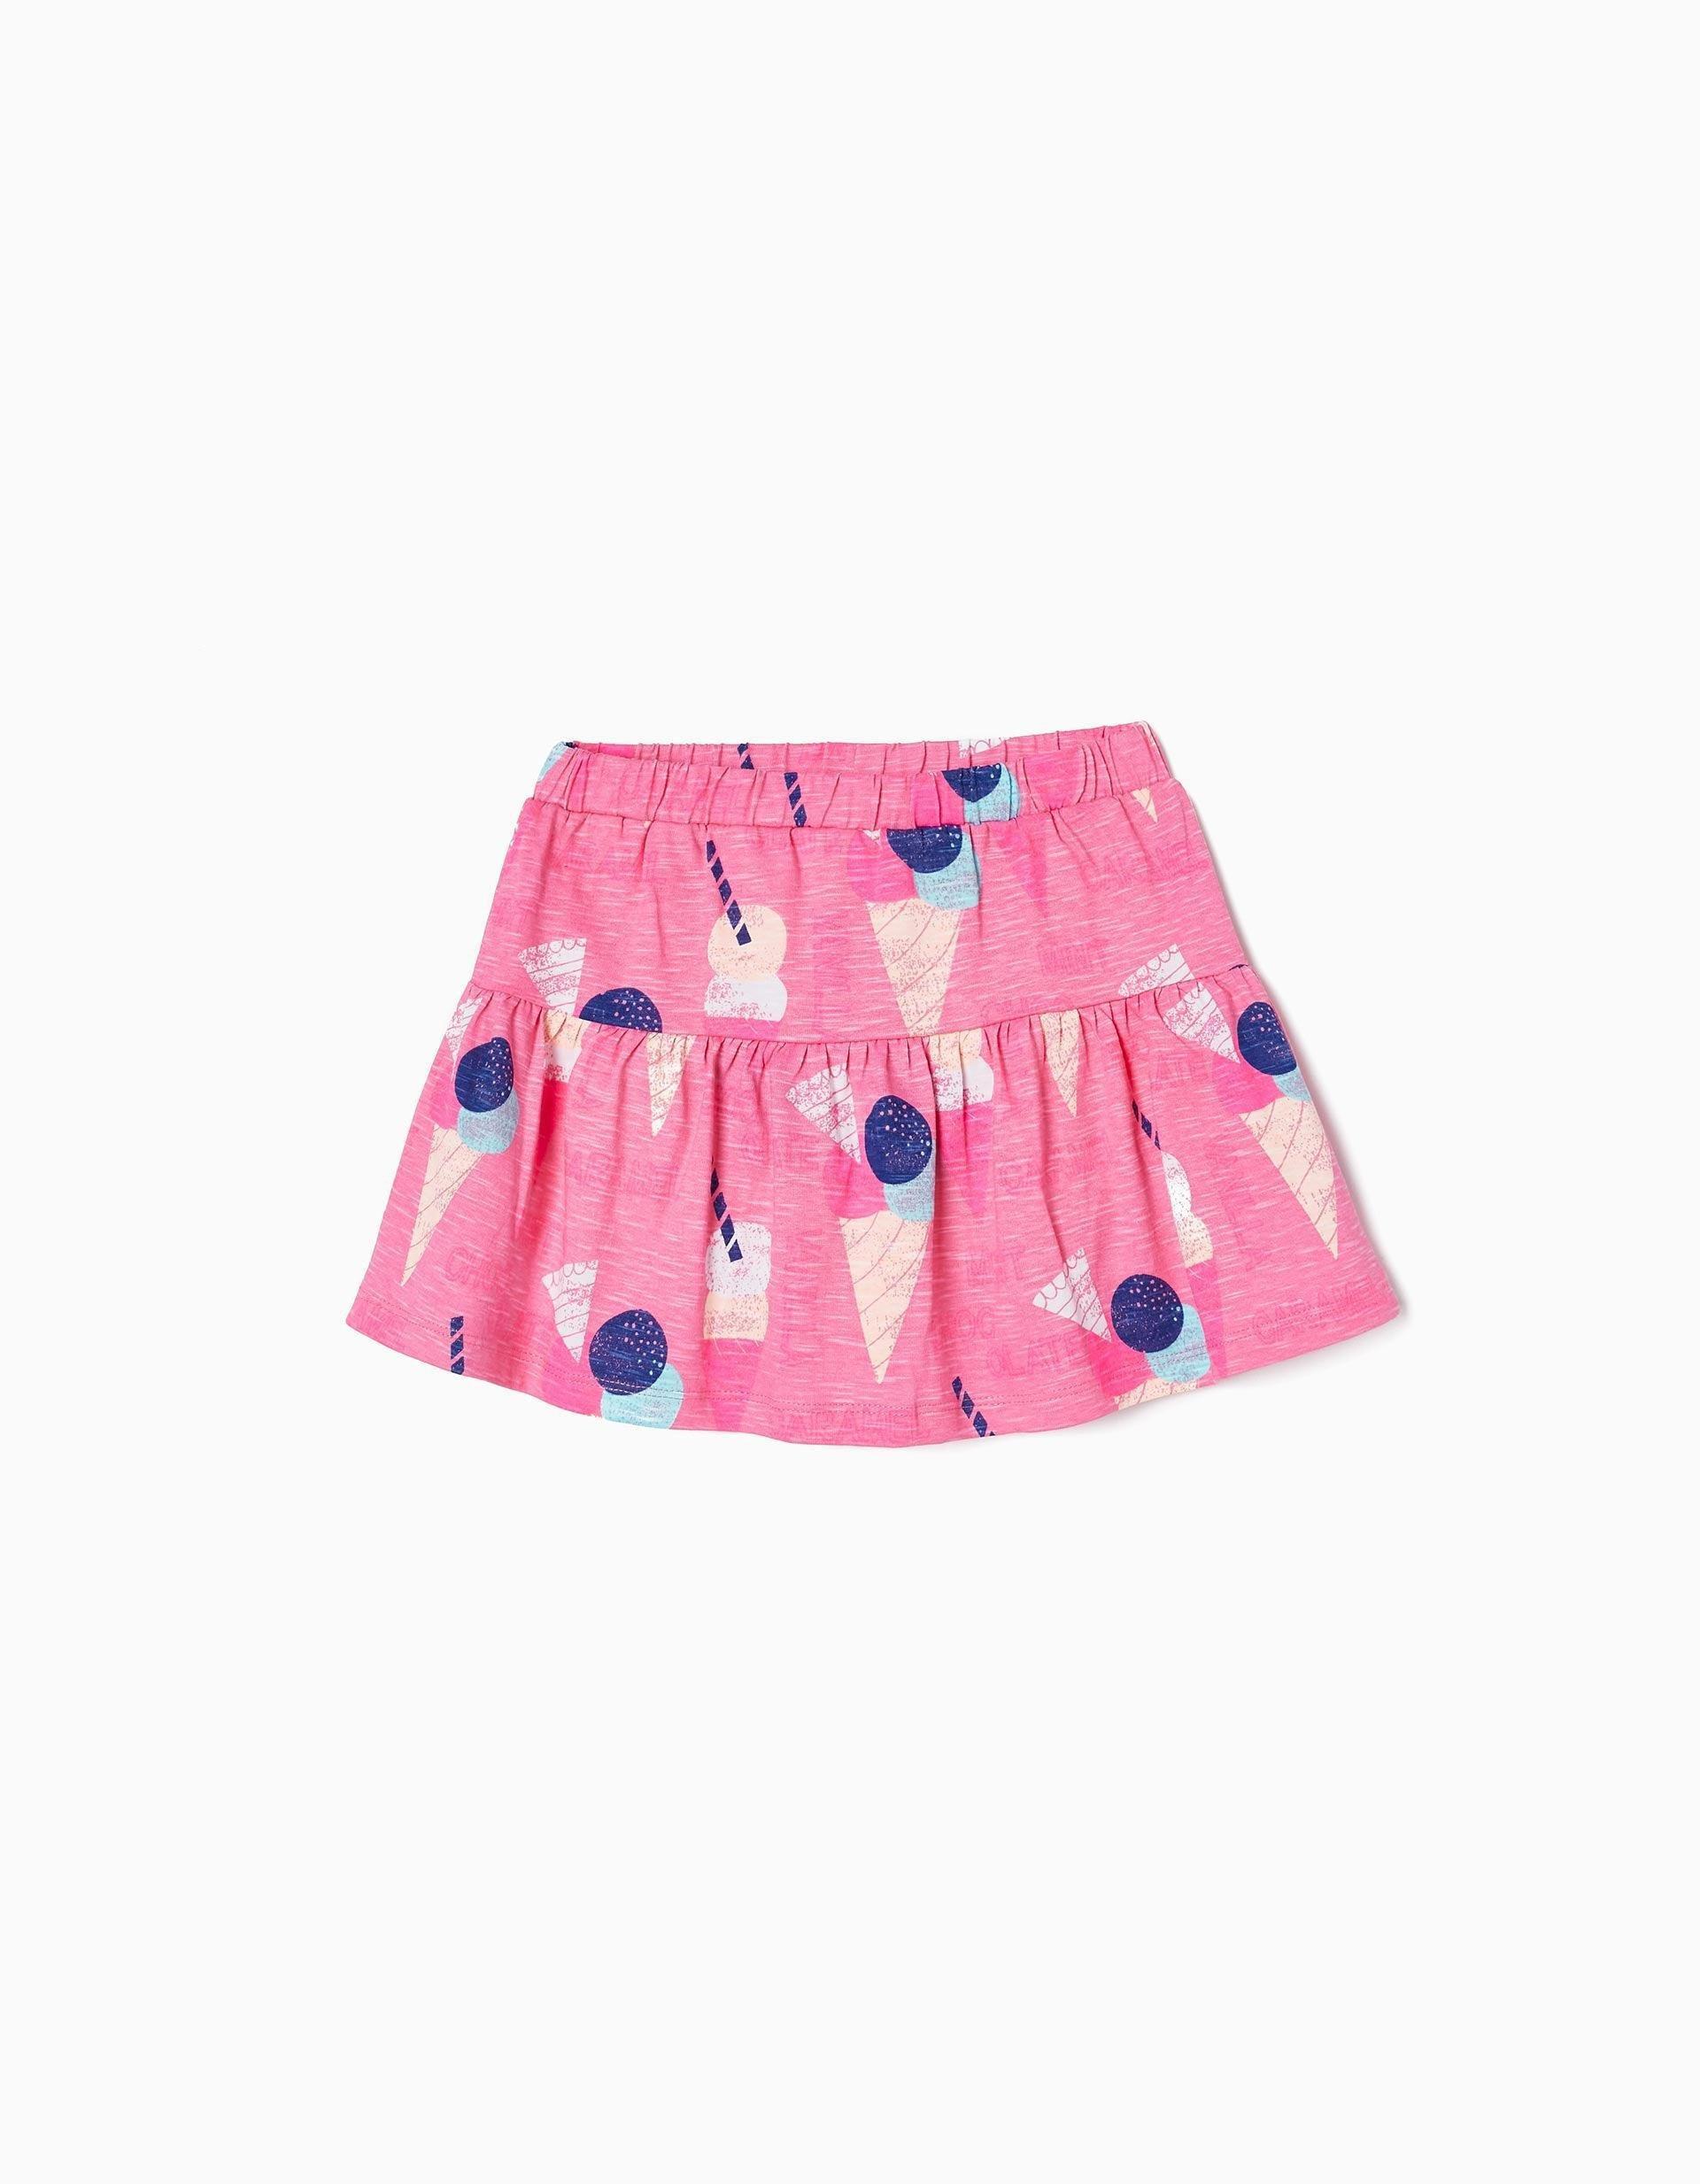 Zippy - Pink Patterned Mini Skirt, Kids Girls